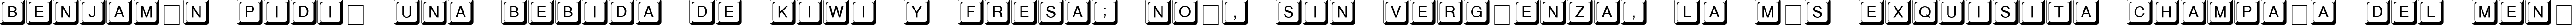 Пример написания шрифтом Keystroke текста на испанском